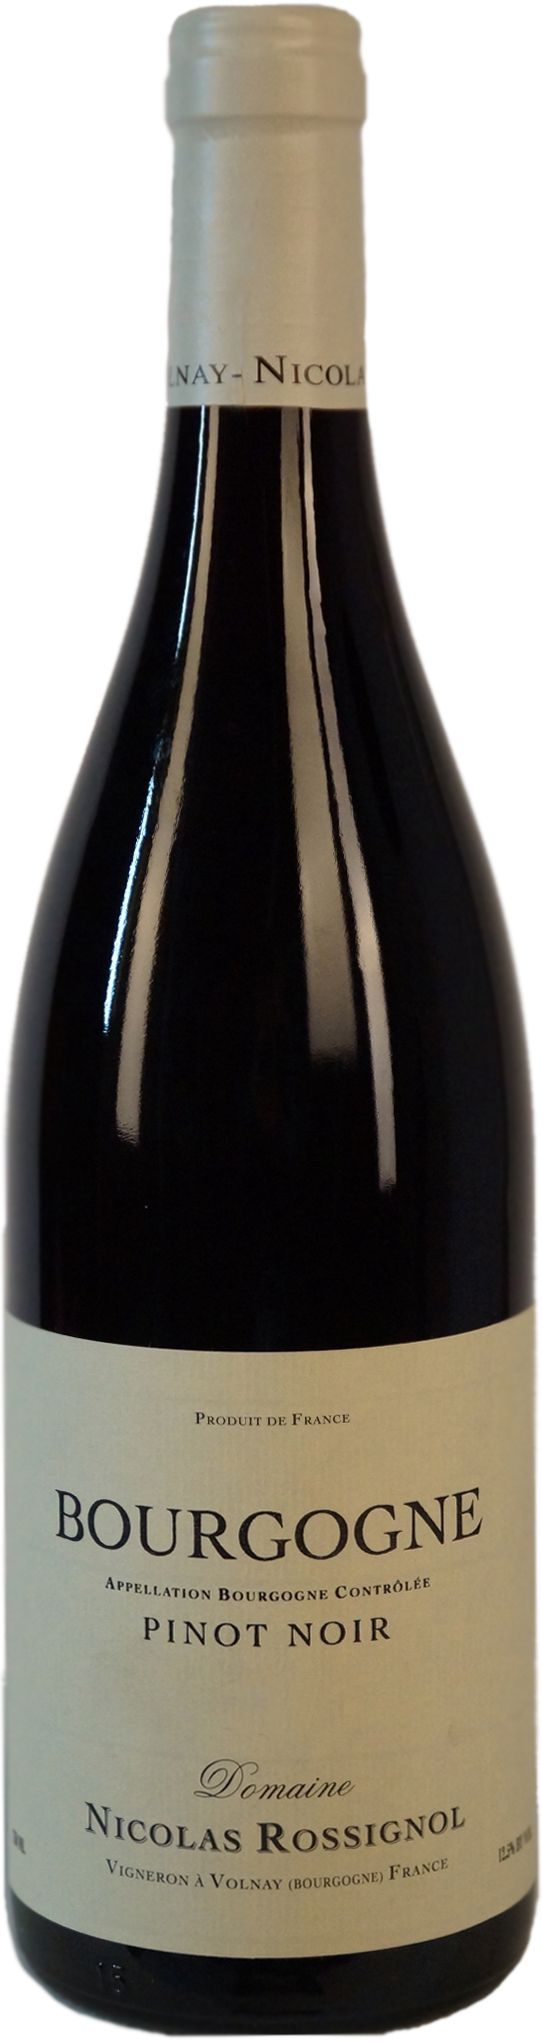 Domaine Nicolas Rossignol, Bourgogne Pinot Noir, 2008